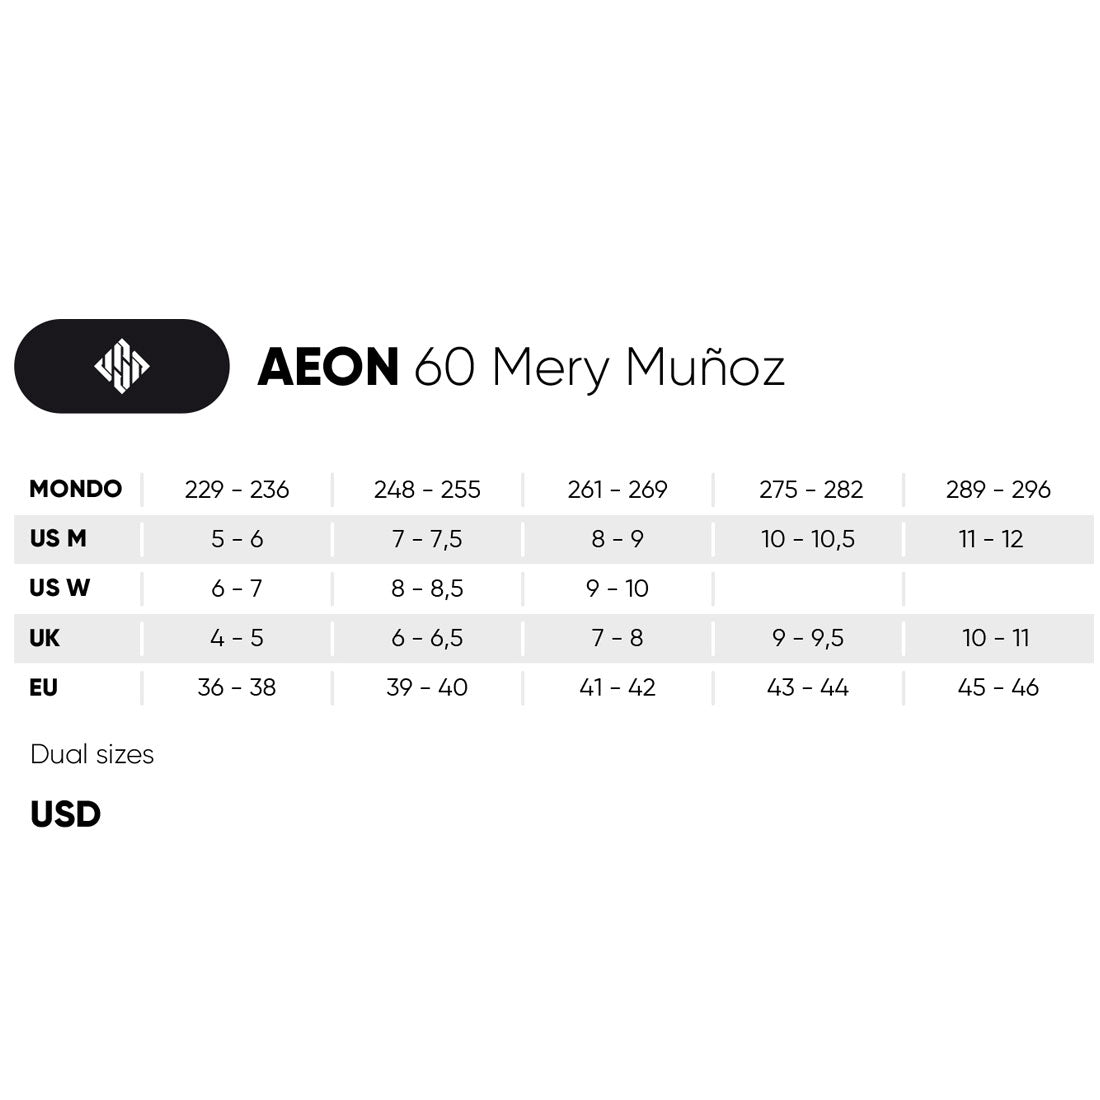 USD Aeon 60 Mery Munoz Pro Skate - Aqua Inline Aggressive Skates